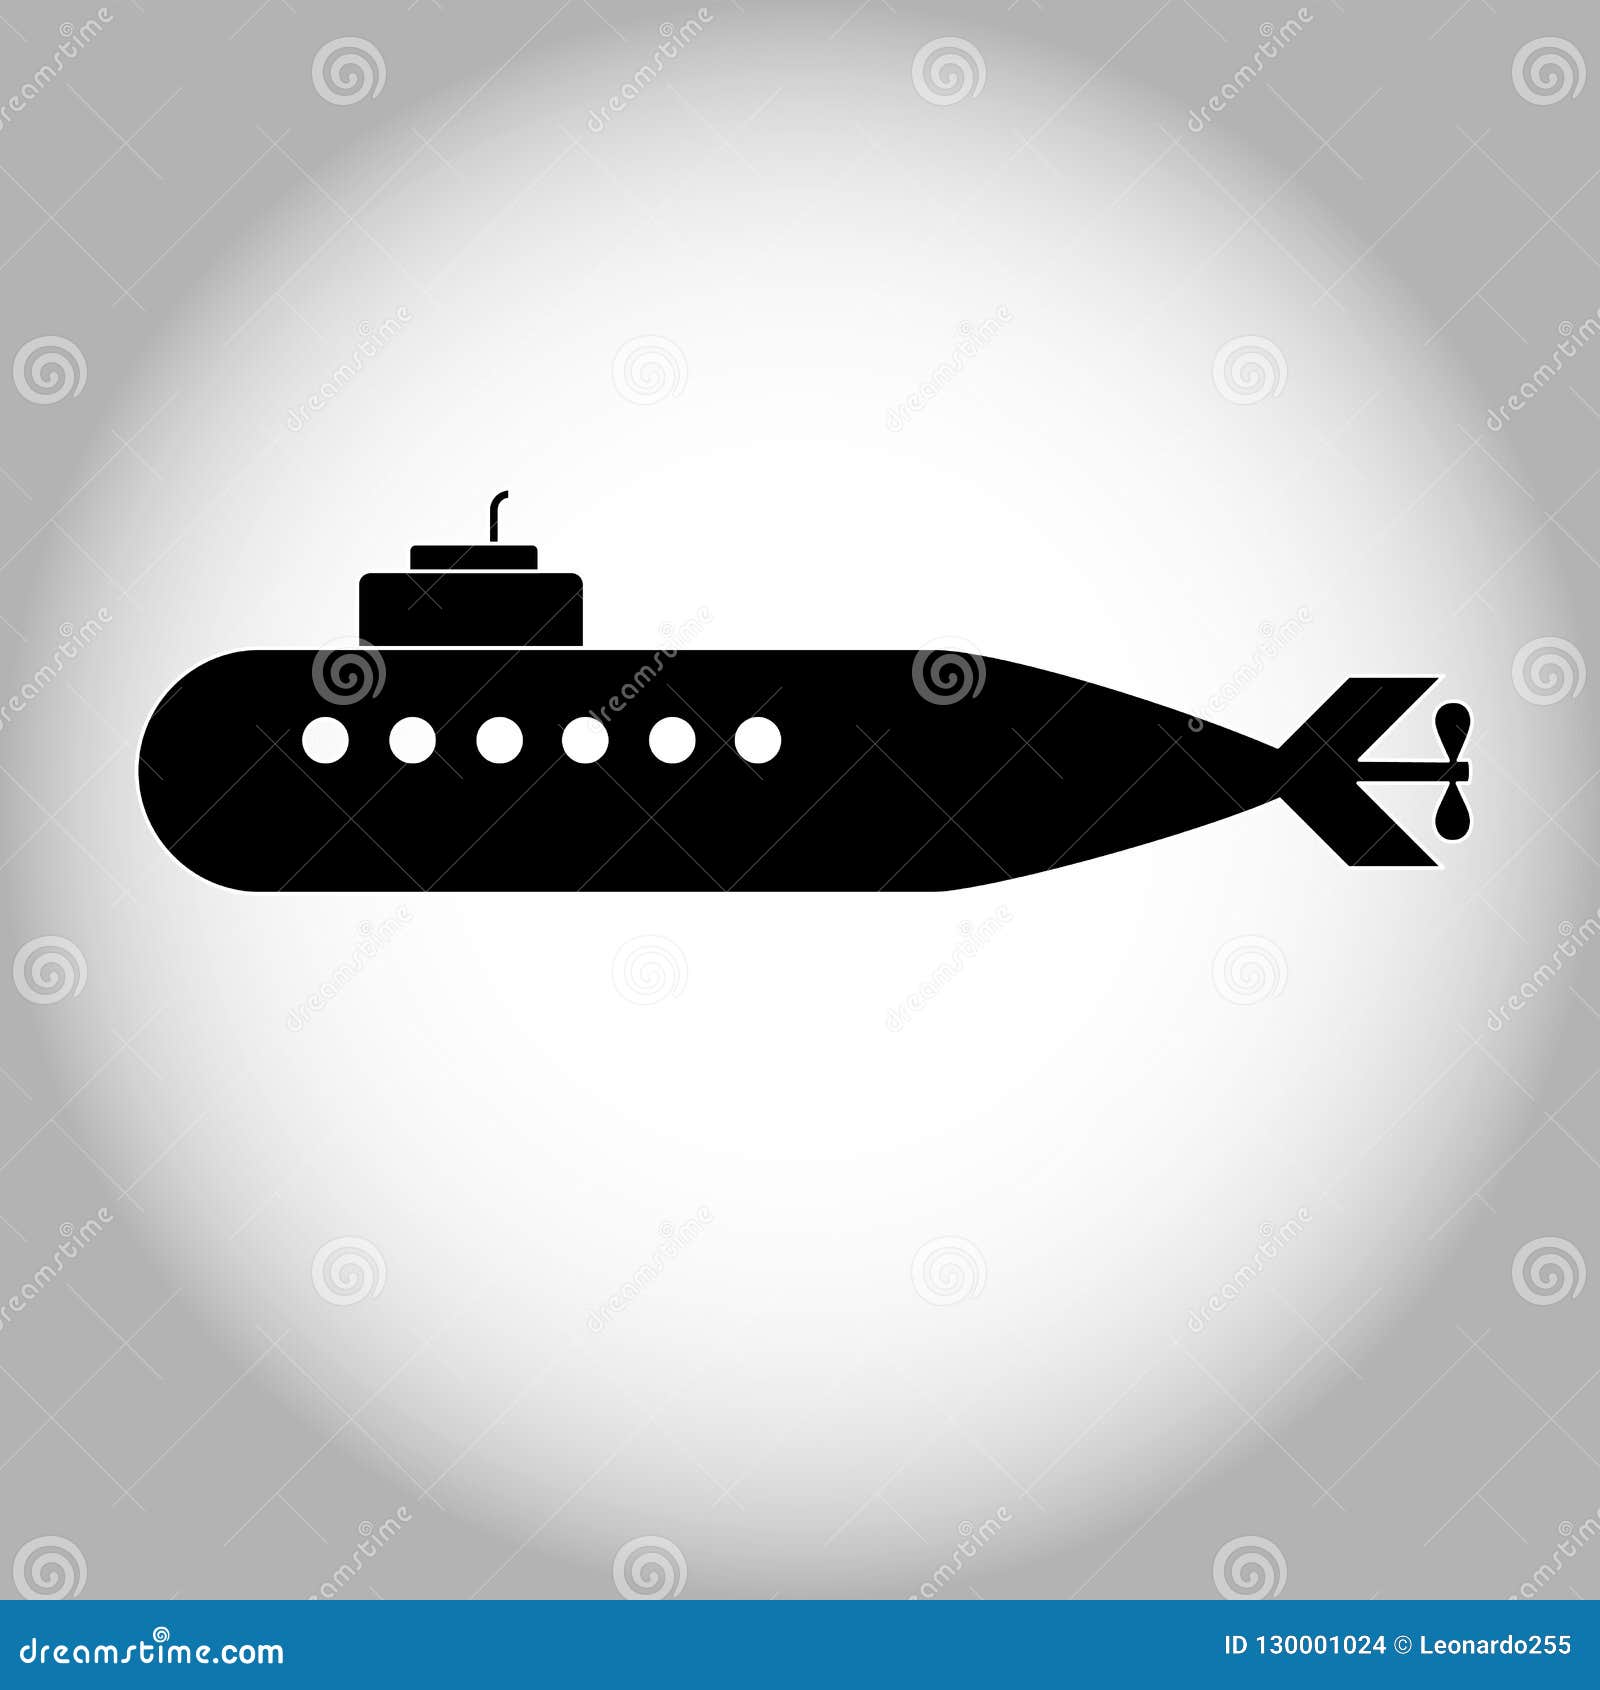 us navy submarine drawing